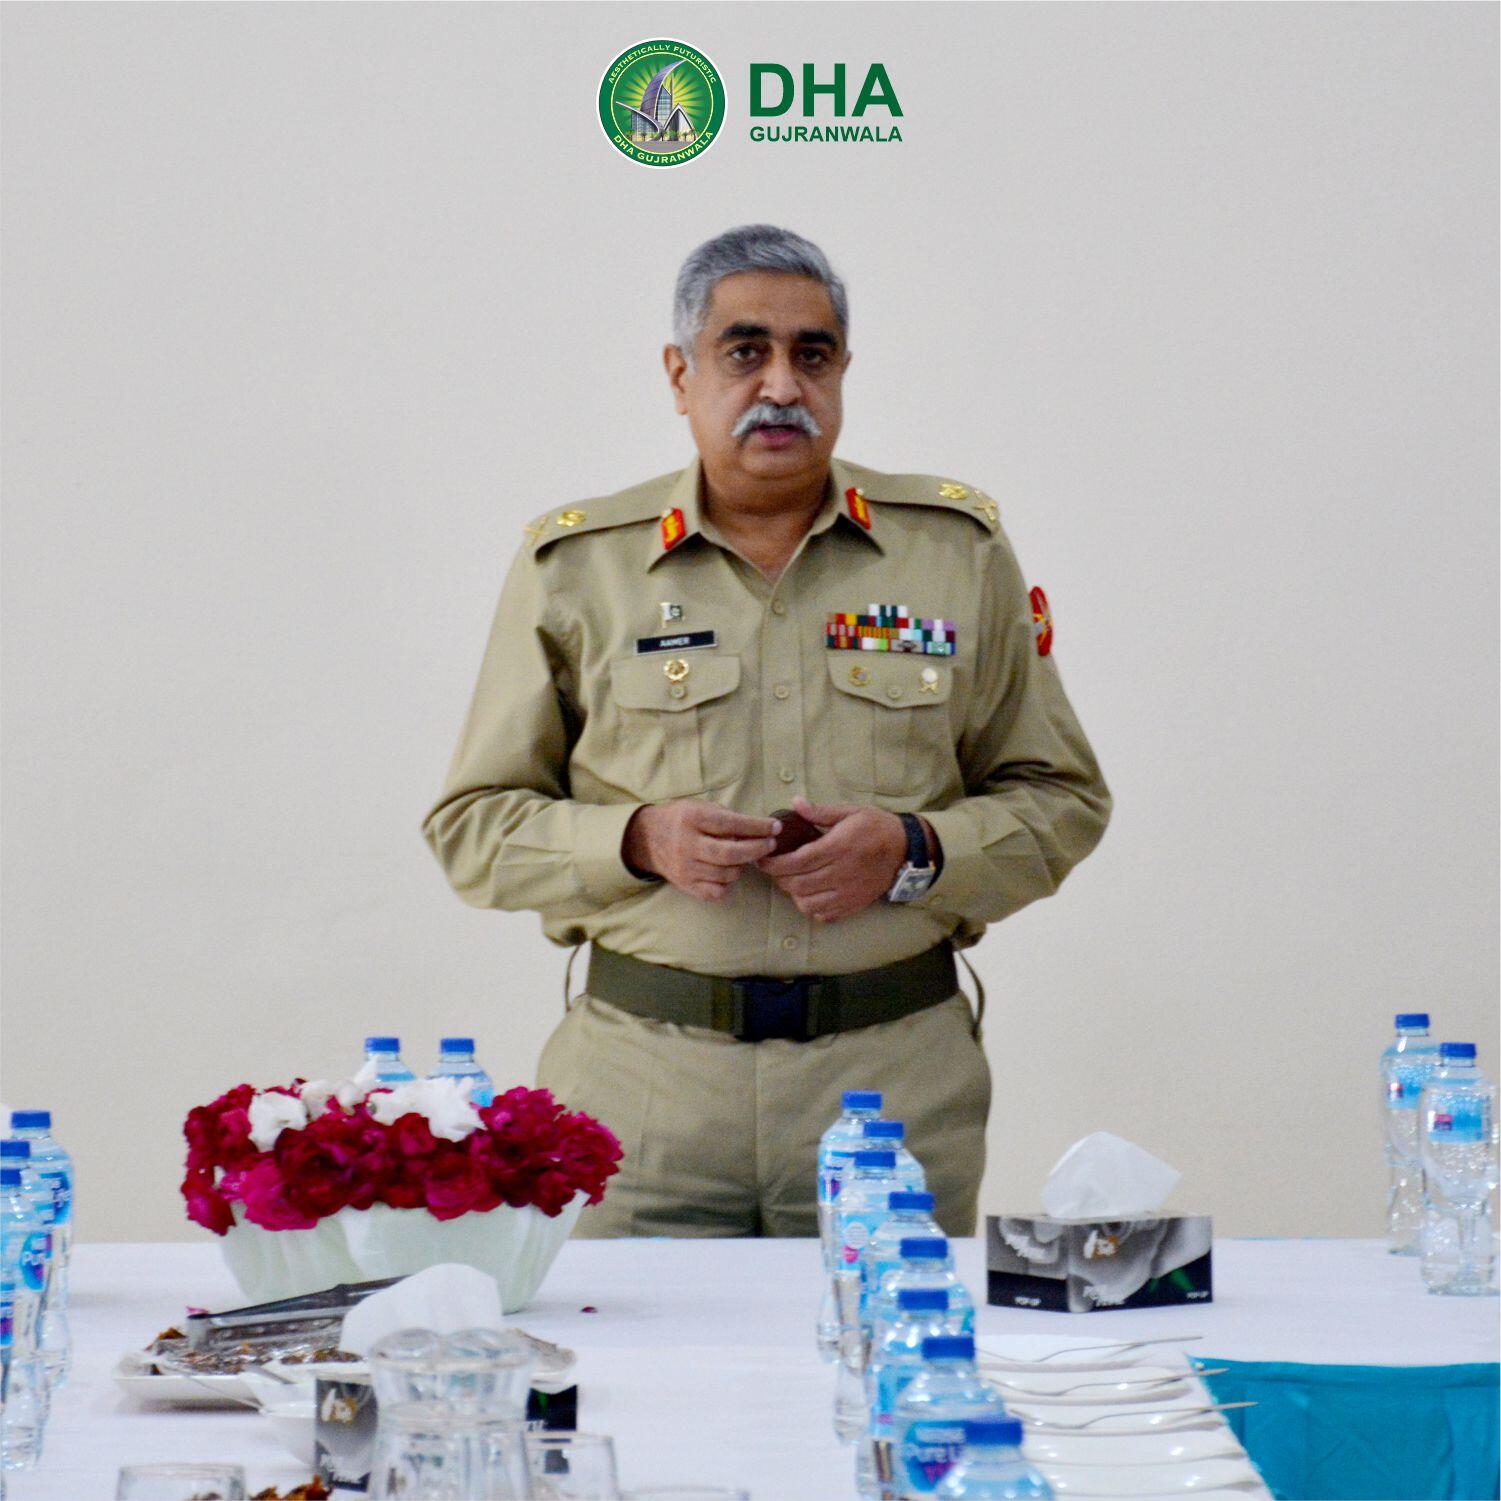 Lt-Gen-Muhammad-Aamer-HI-M-Chairman-DHA-Gujranwala-Visited-DHA-Gujranwala-Head-Office.jpg